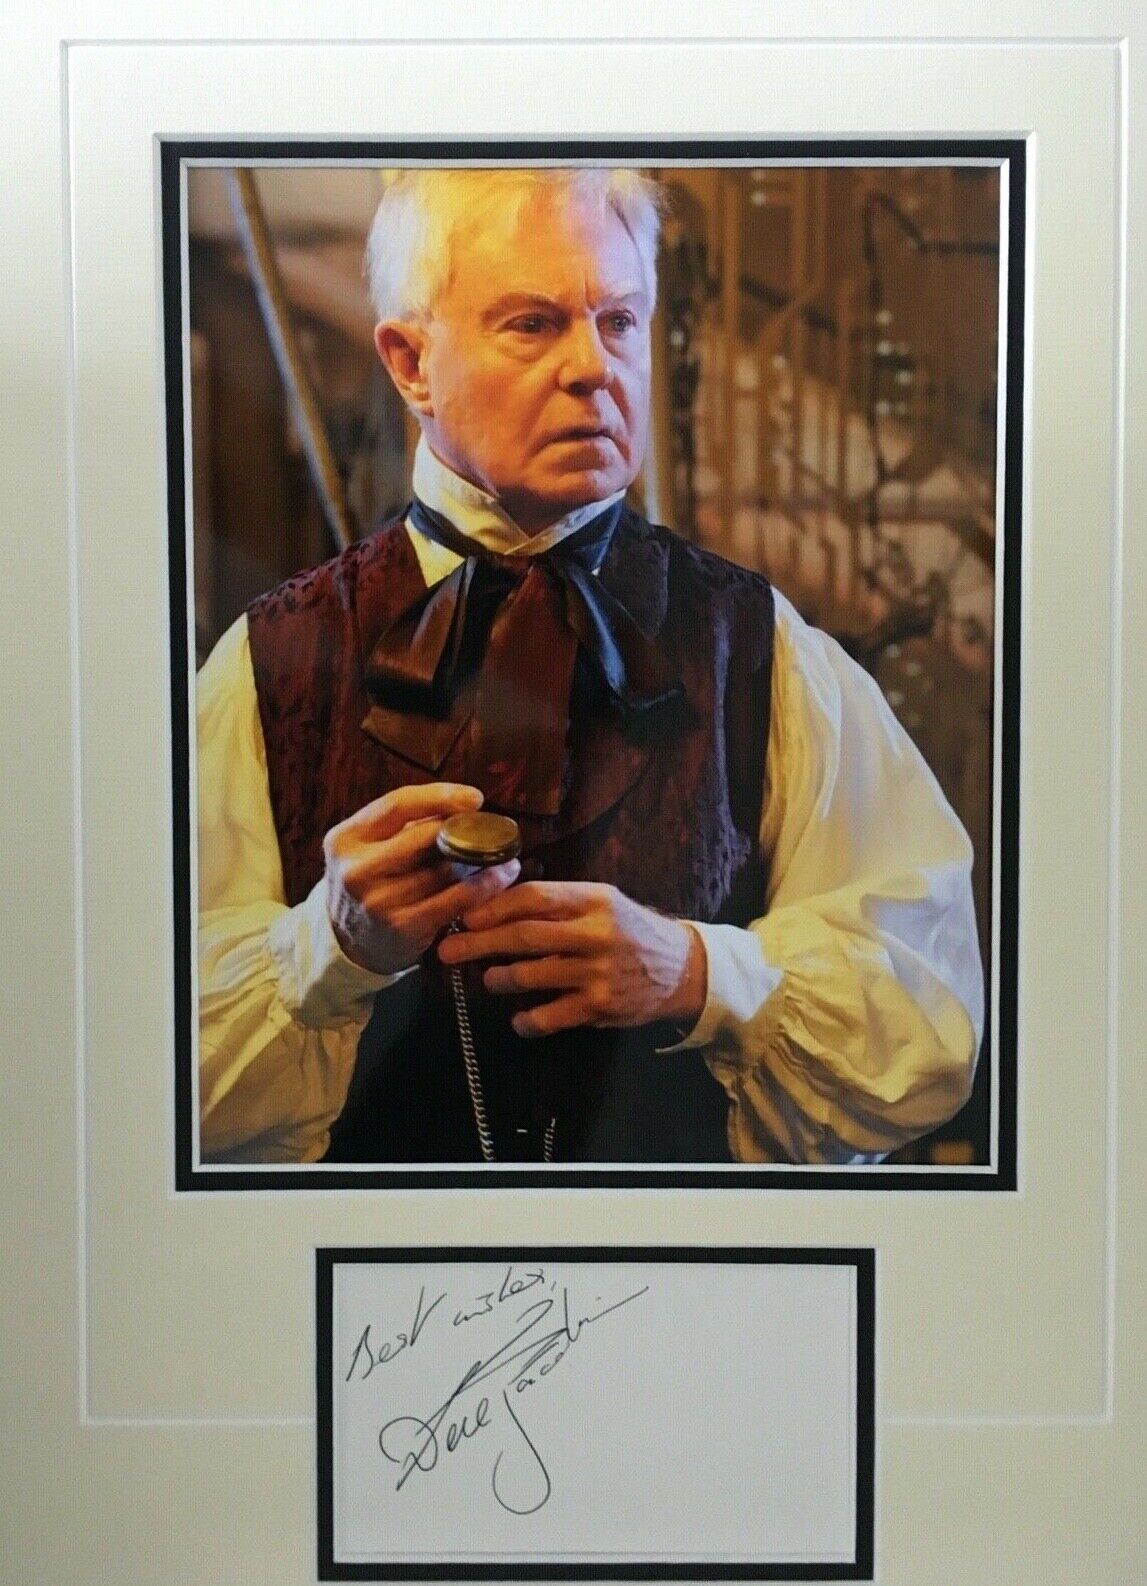 DEREK JACOBI - GREAT BRITISH ACTOR - DR WHO - SUPERB SIGNED Photo Poster painting DISPLAY